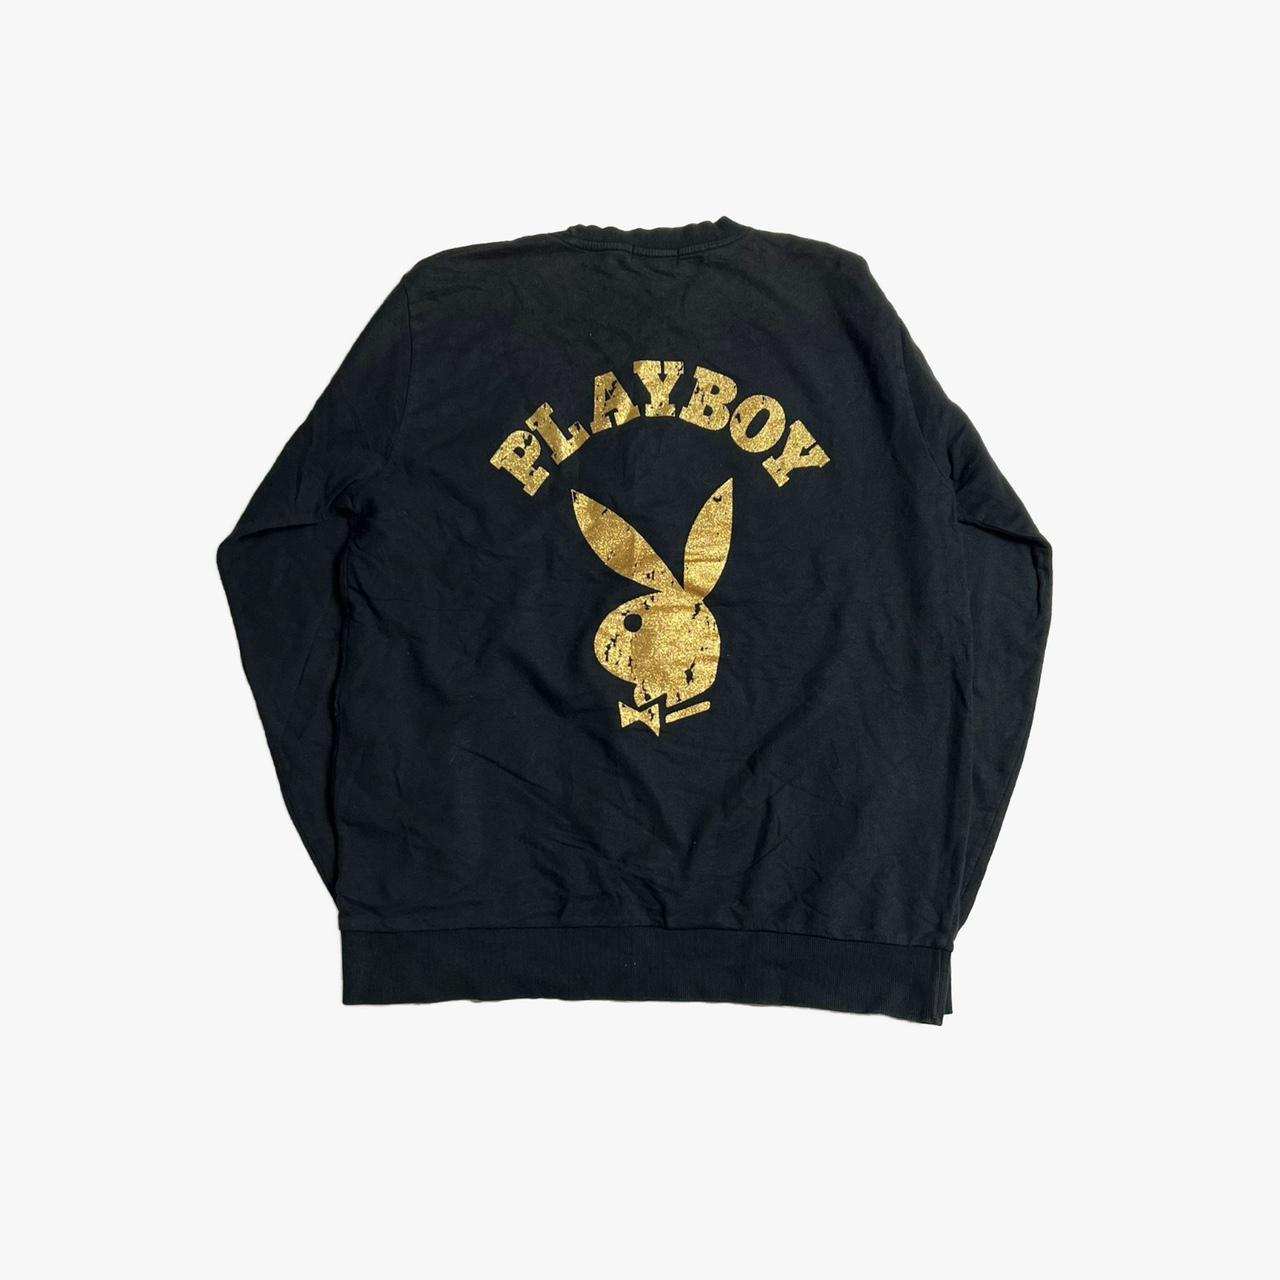 Vintage Playboy bunny sweatshirt. Size medium. Item... - Depop